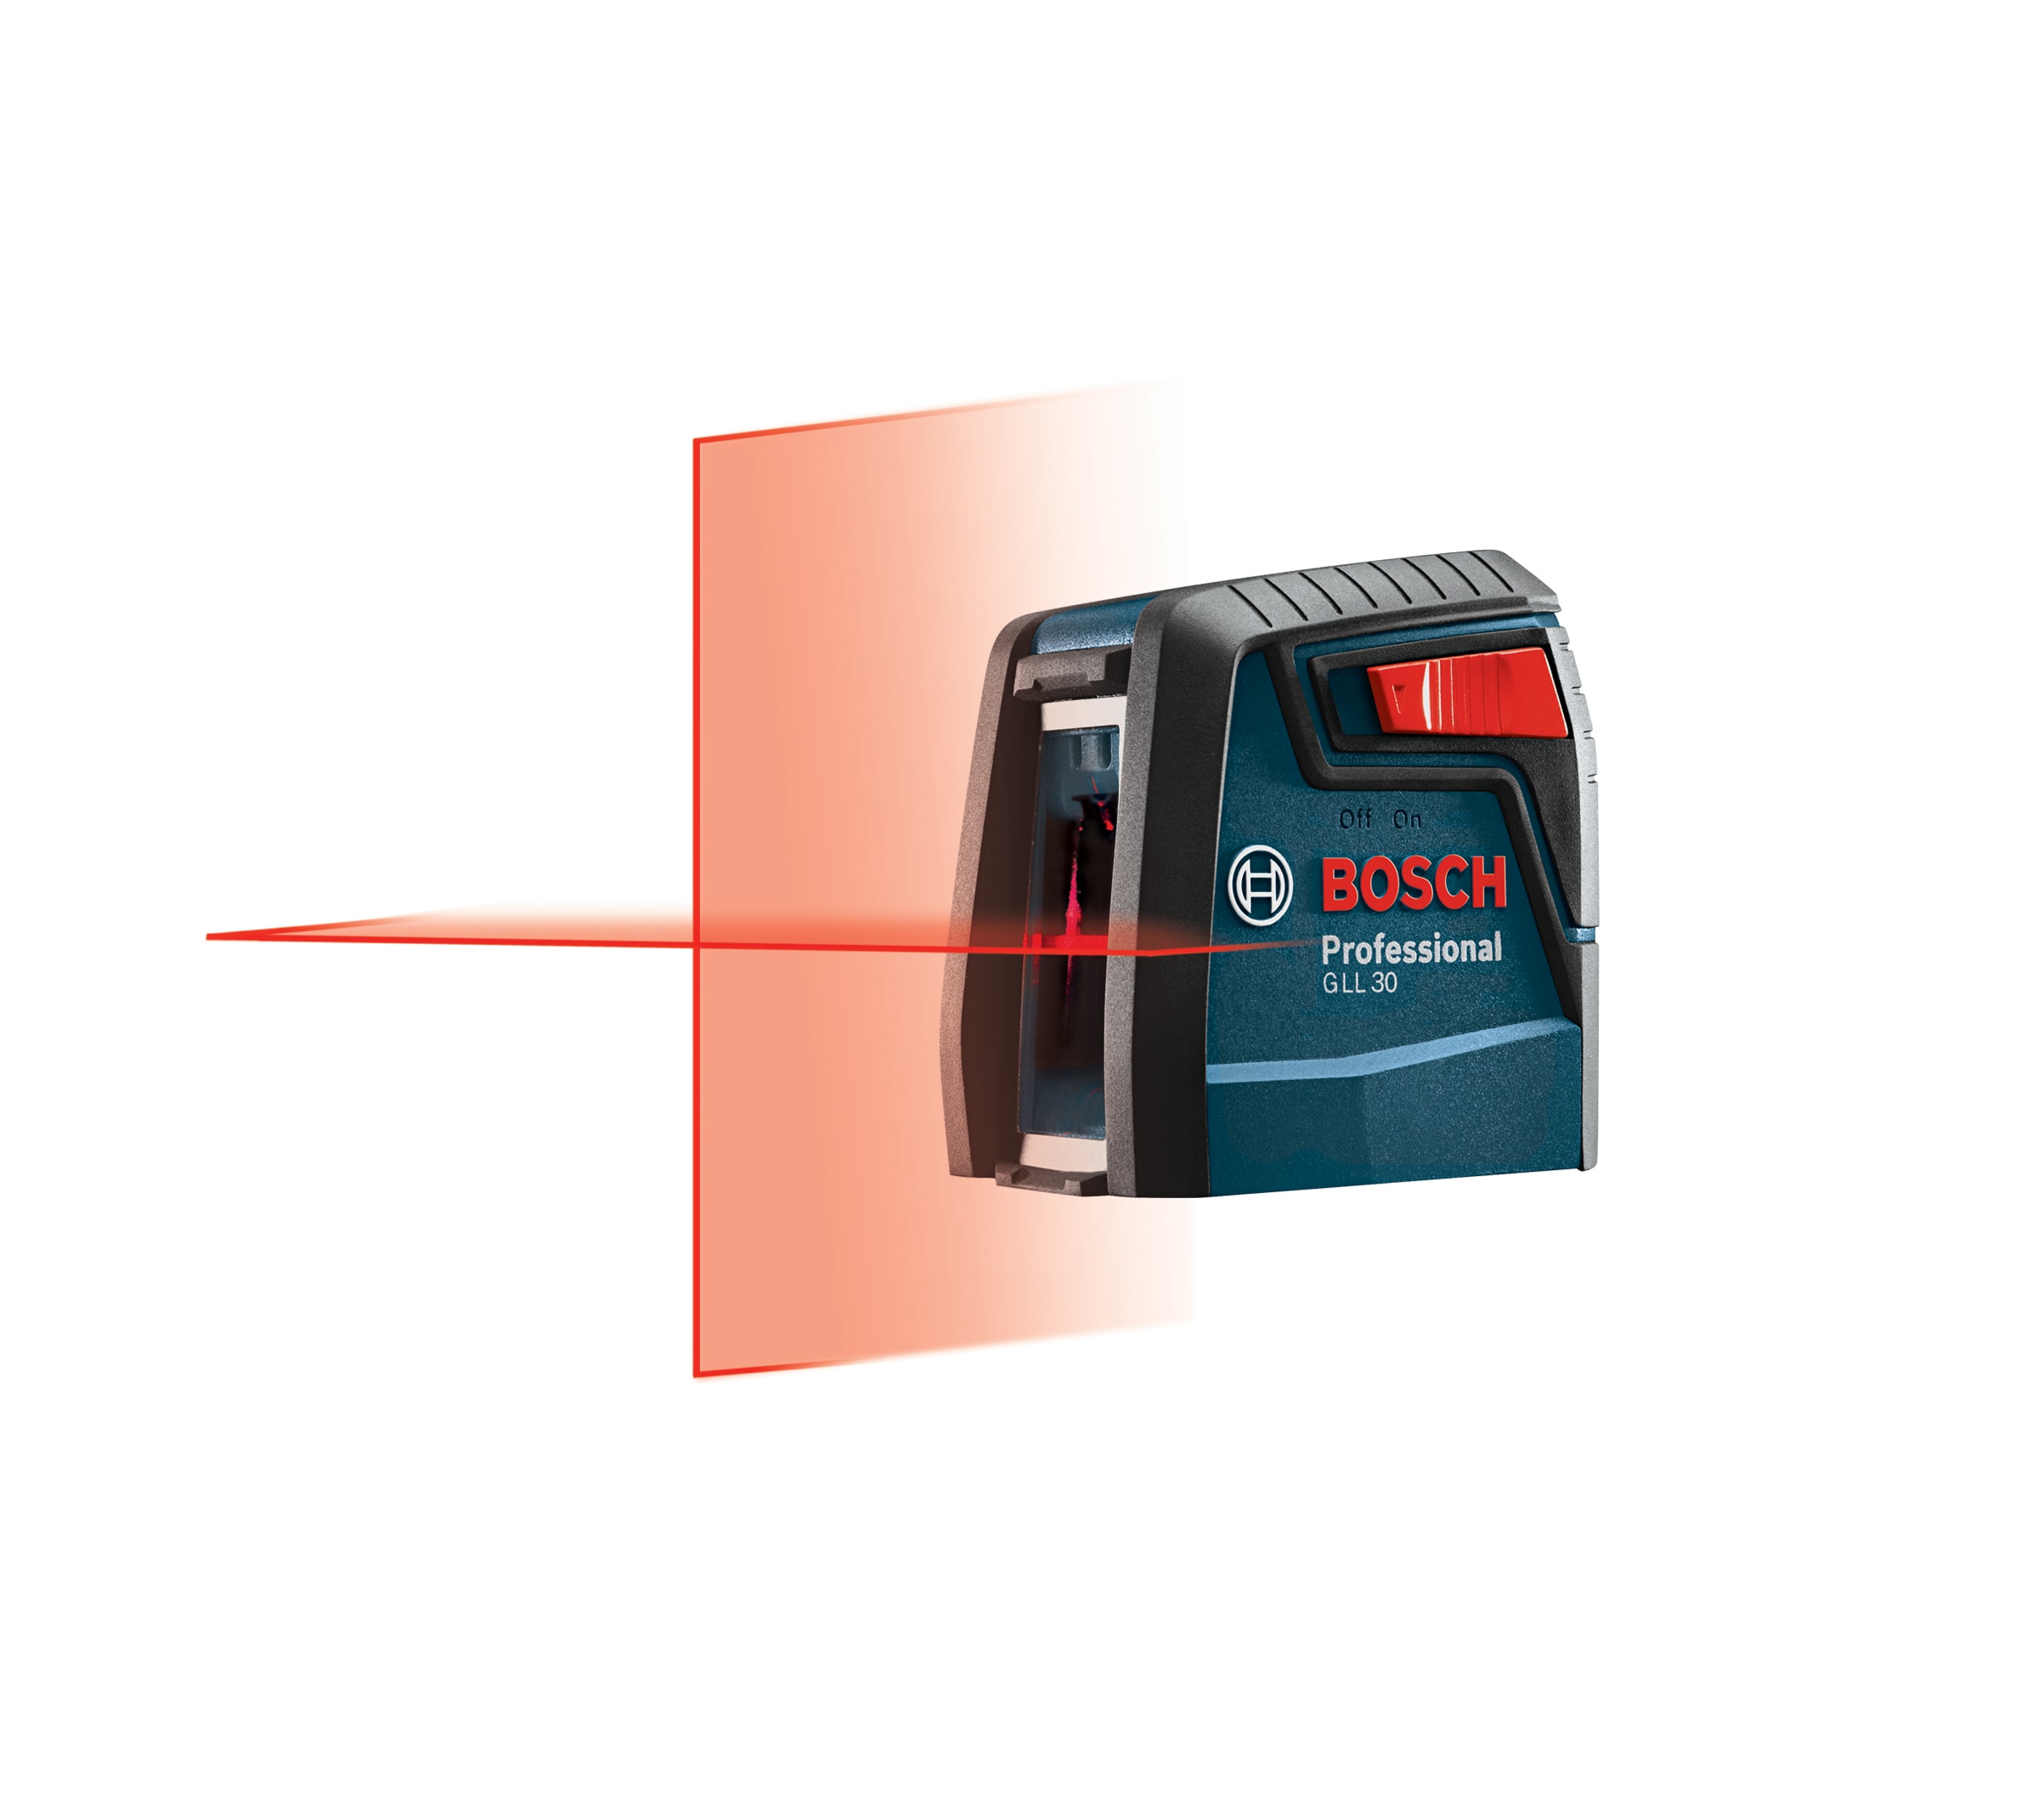 Bosch Laser Levels at